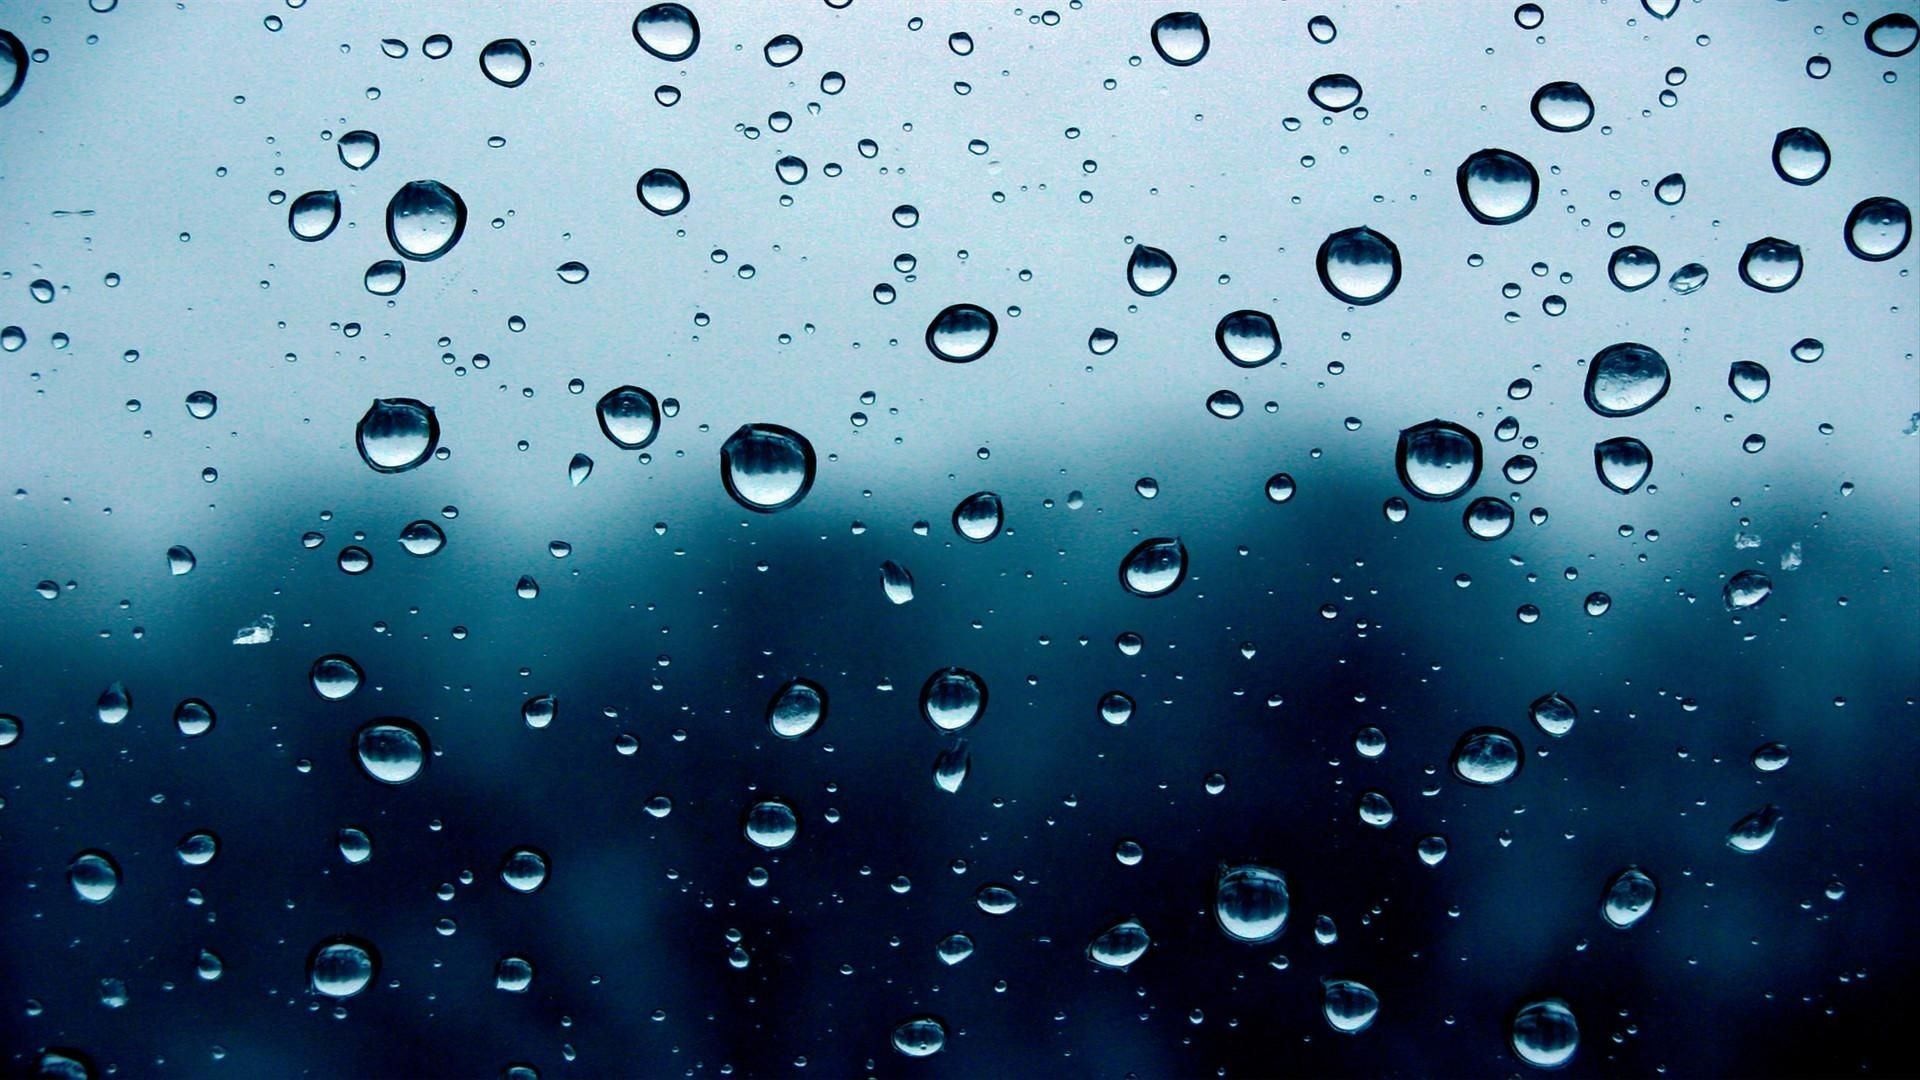 1920x1080 Background Tumblr. Background Tumblr Rain Drops On Window ...